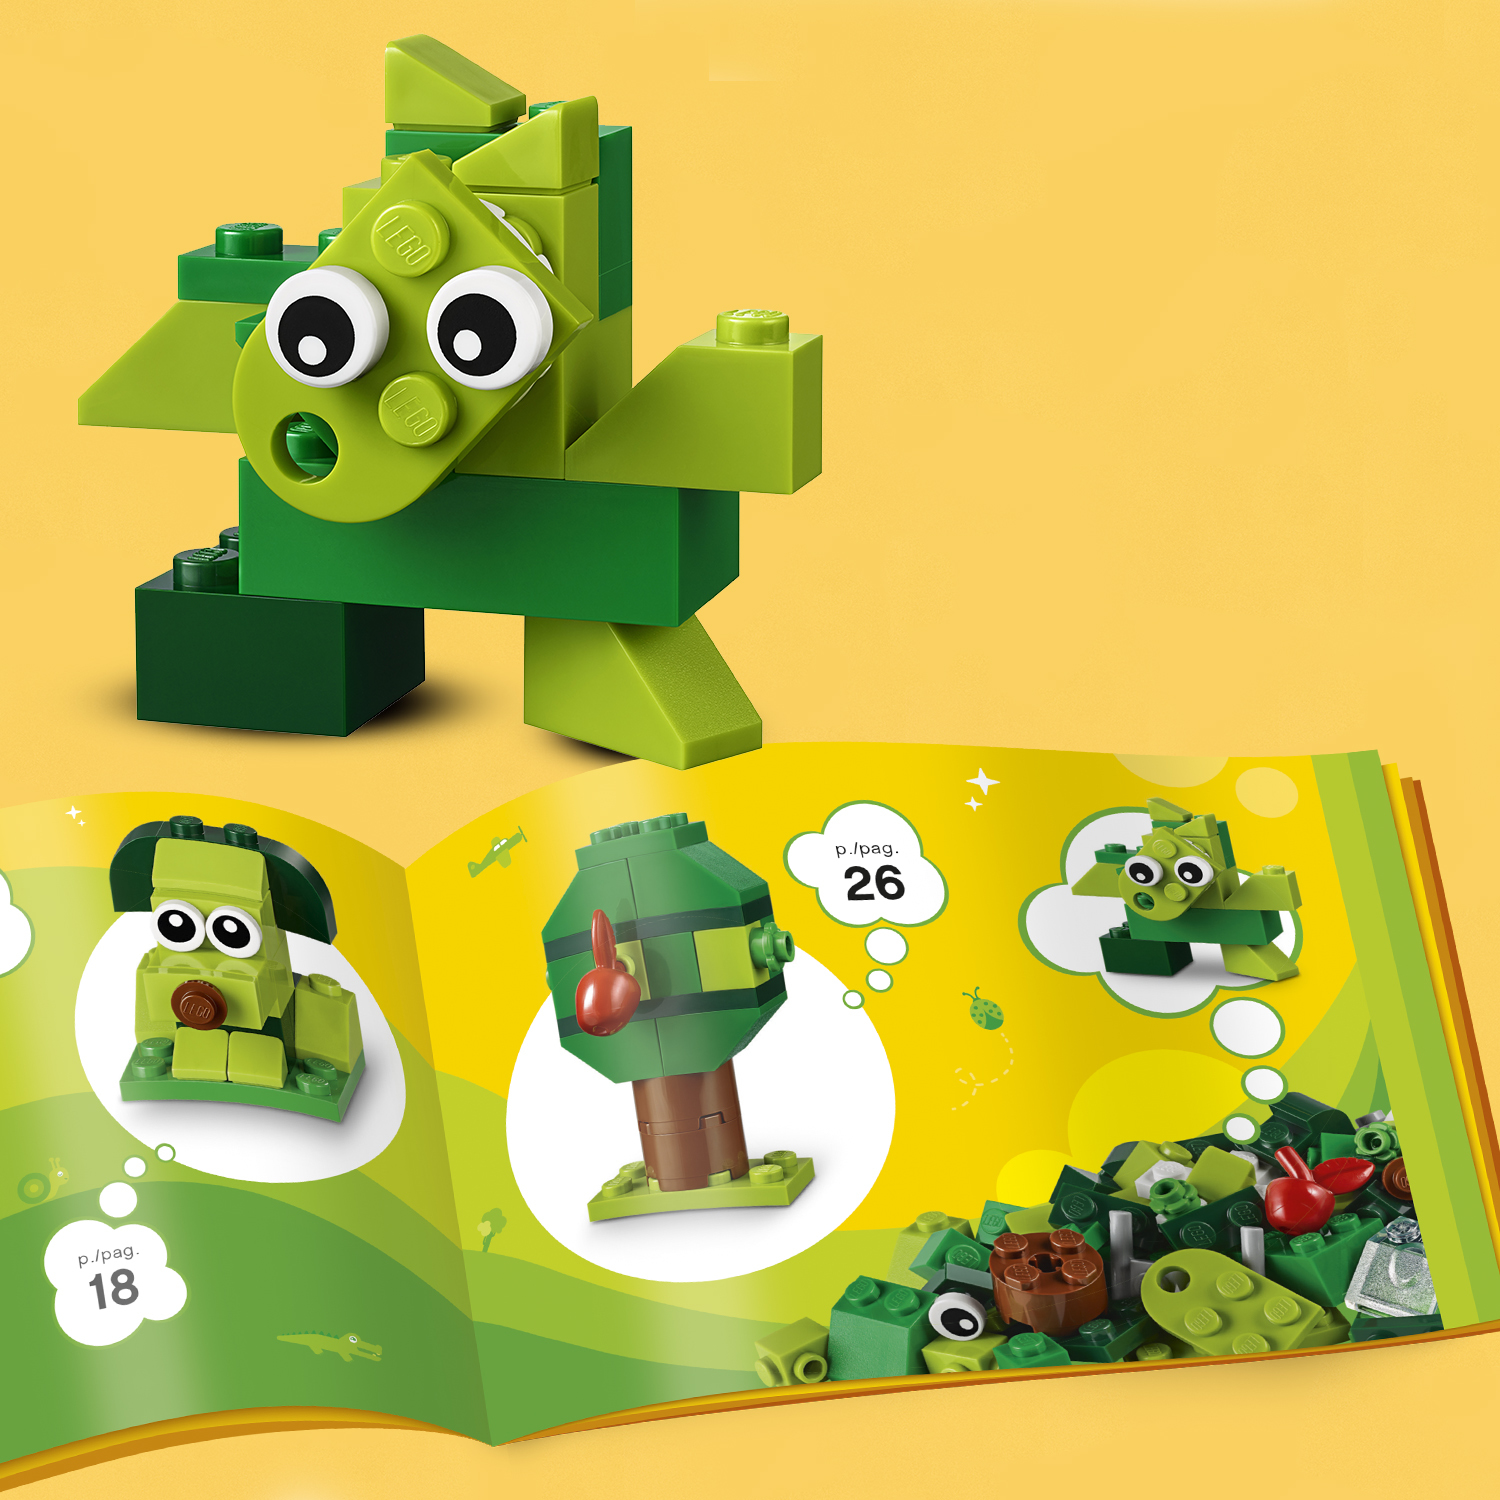 LEGO Classic Grünes Kreativ-Set